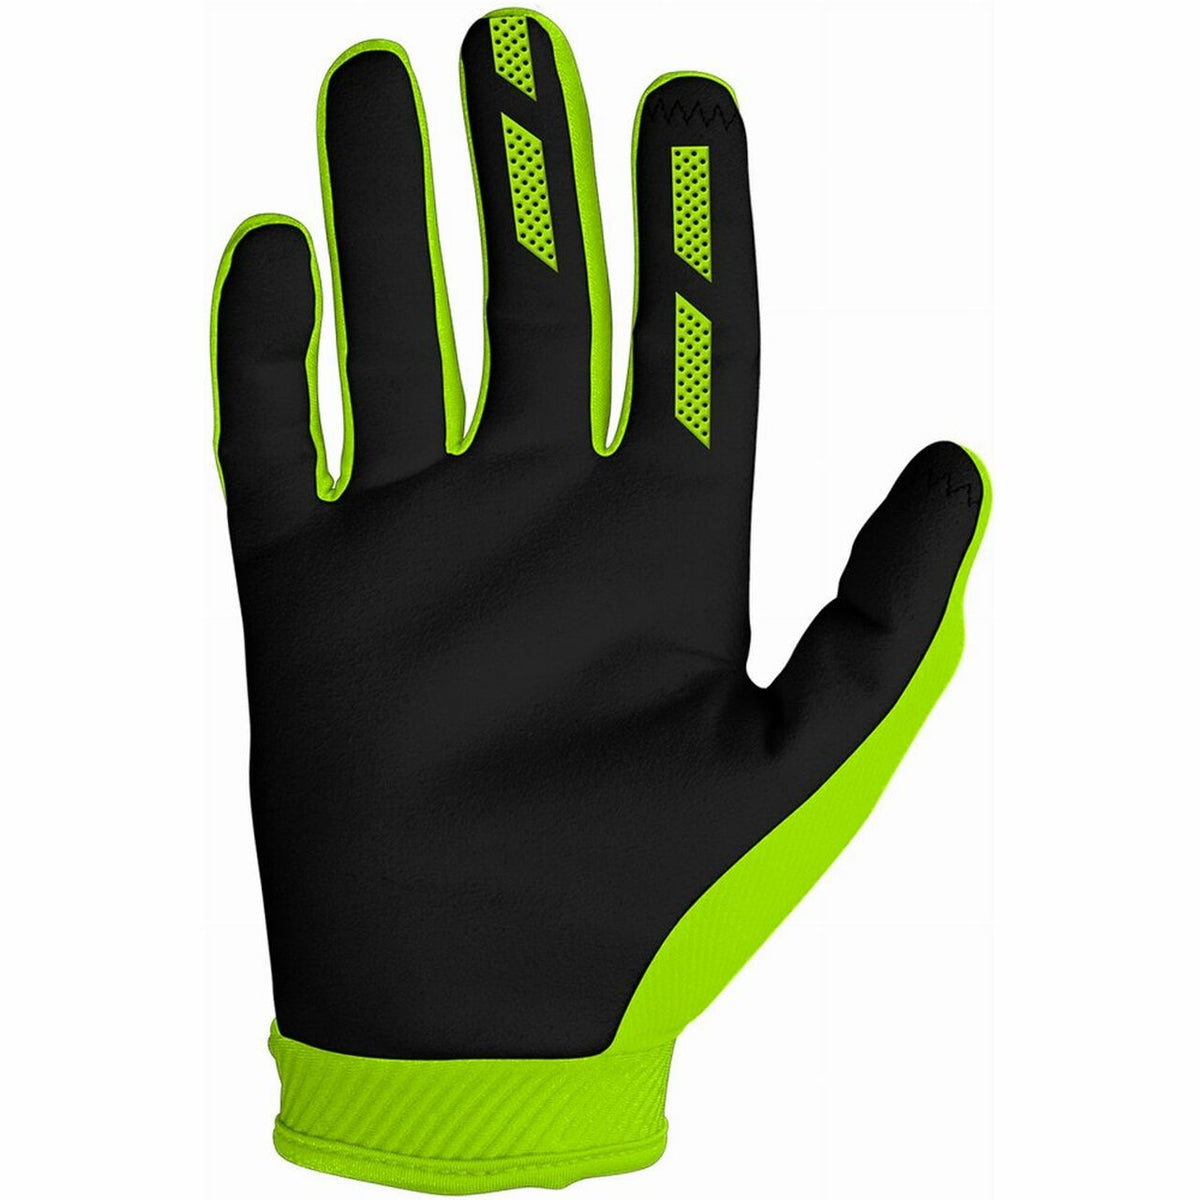 Seven Annex Ethika Gloves